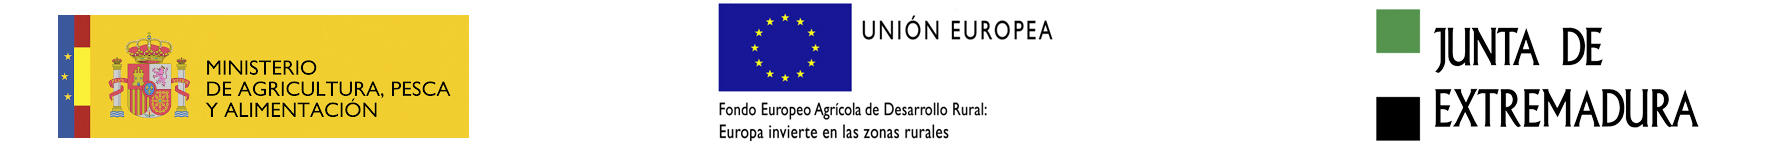 MINISTERIO DE AGRICULTURA - UNION EUROPEA - JUNTA DE EXTREMADURA